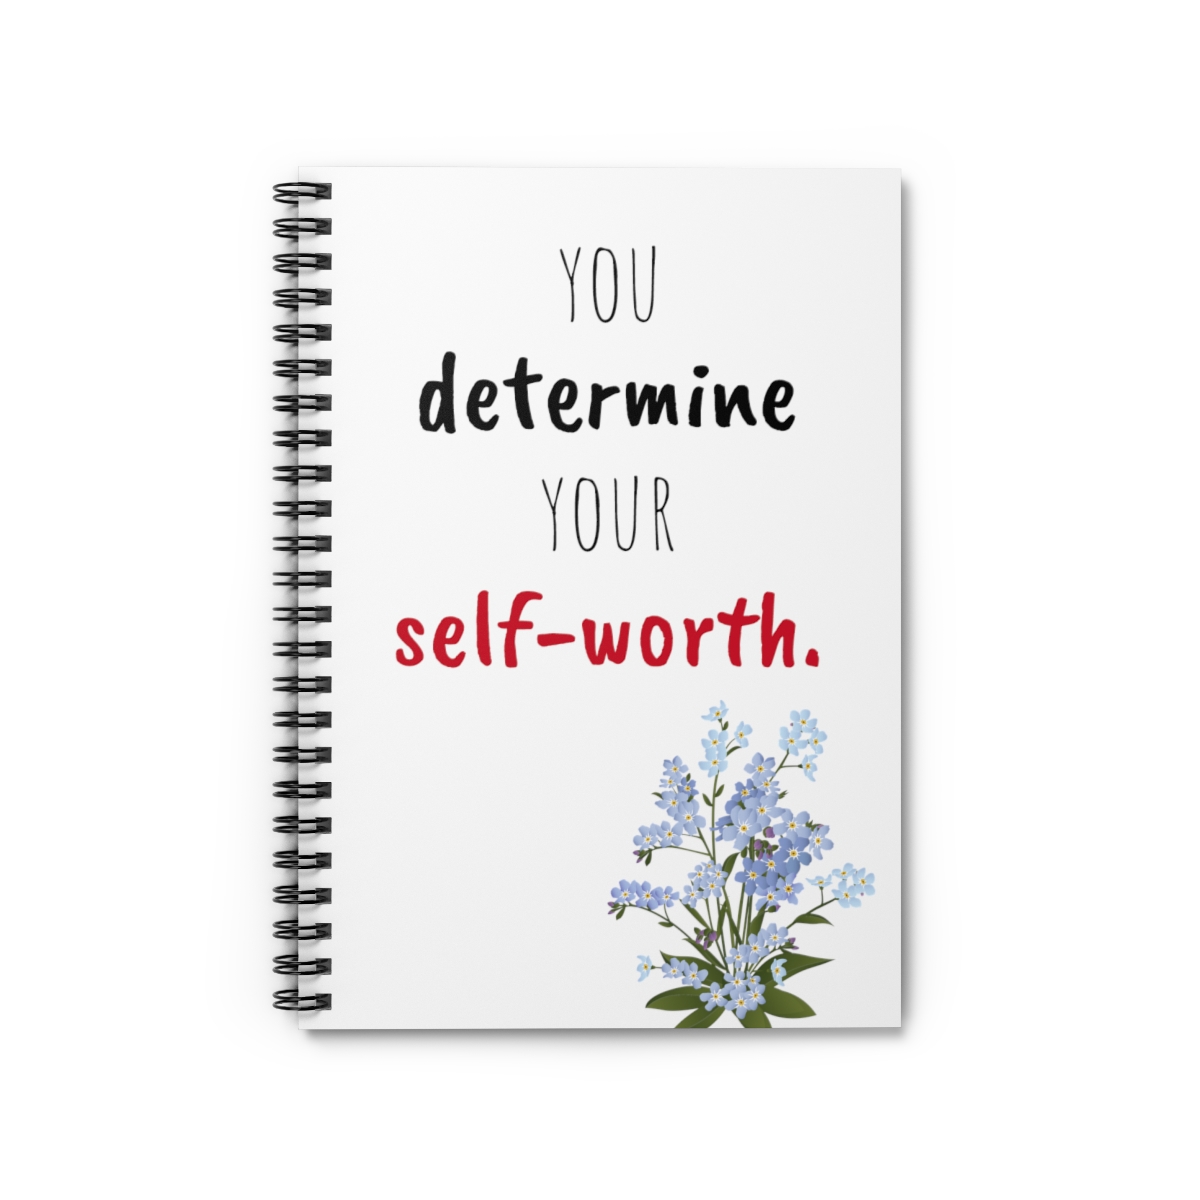 Self-Worth Spiral Notebook | Ruled Line